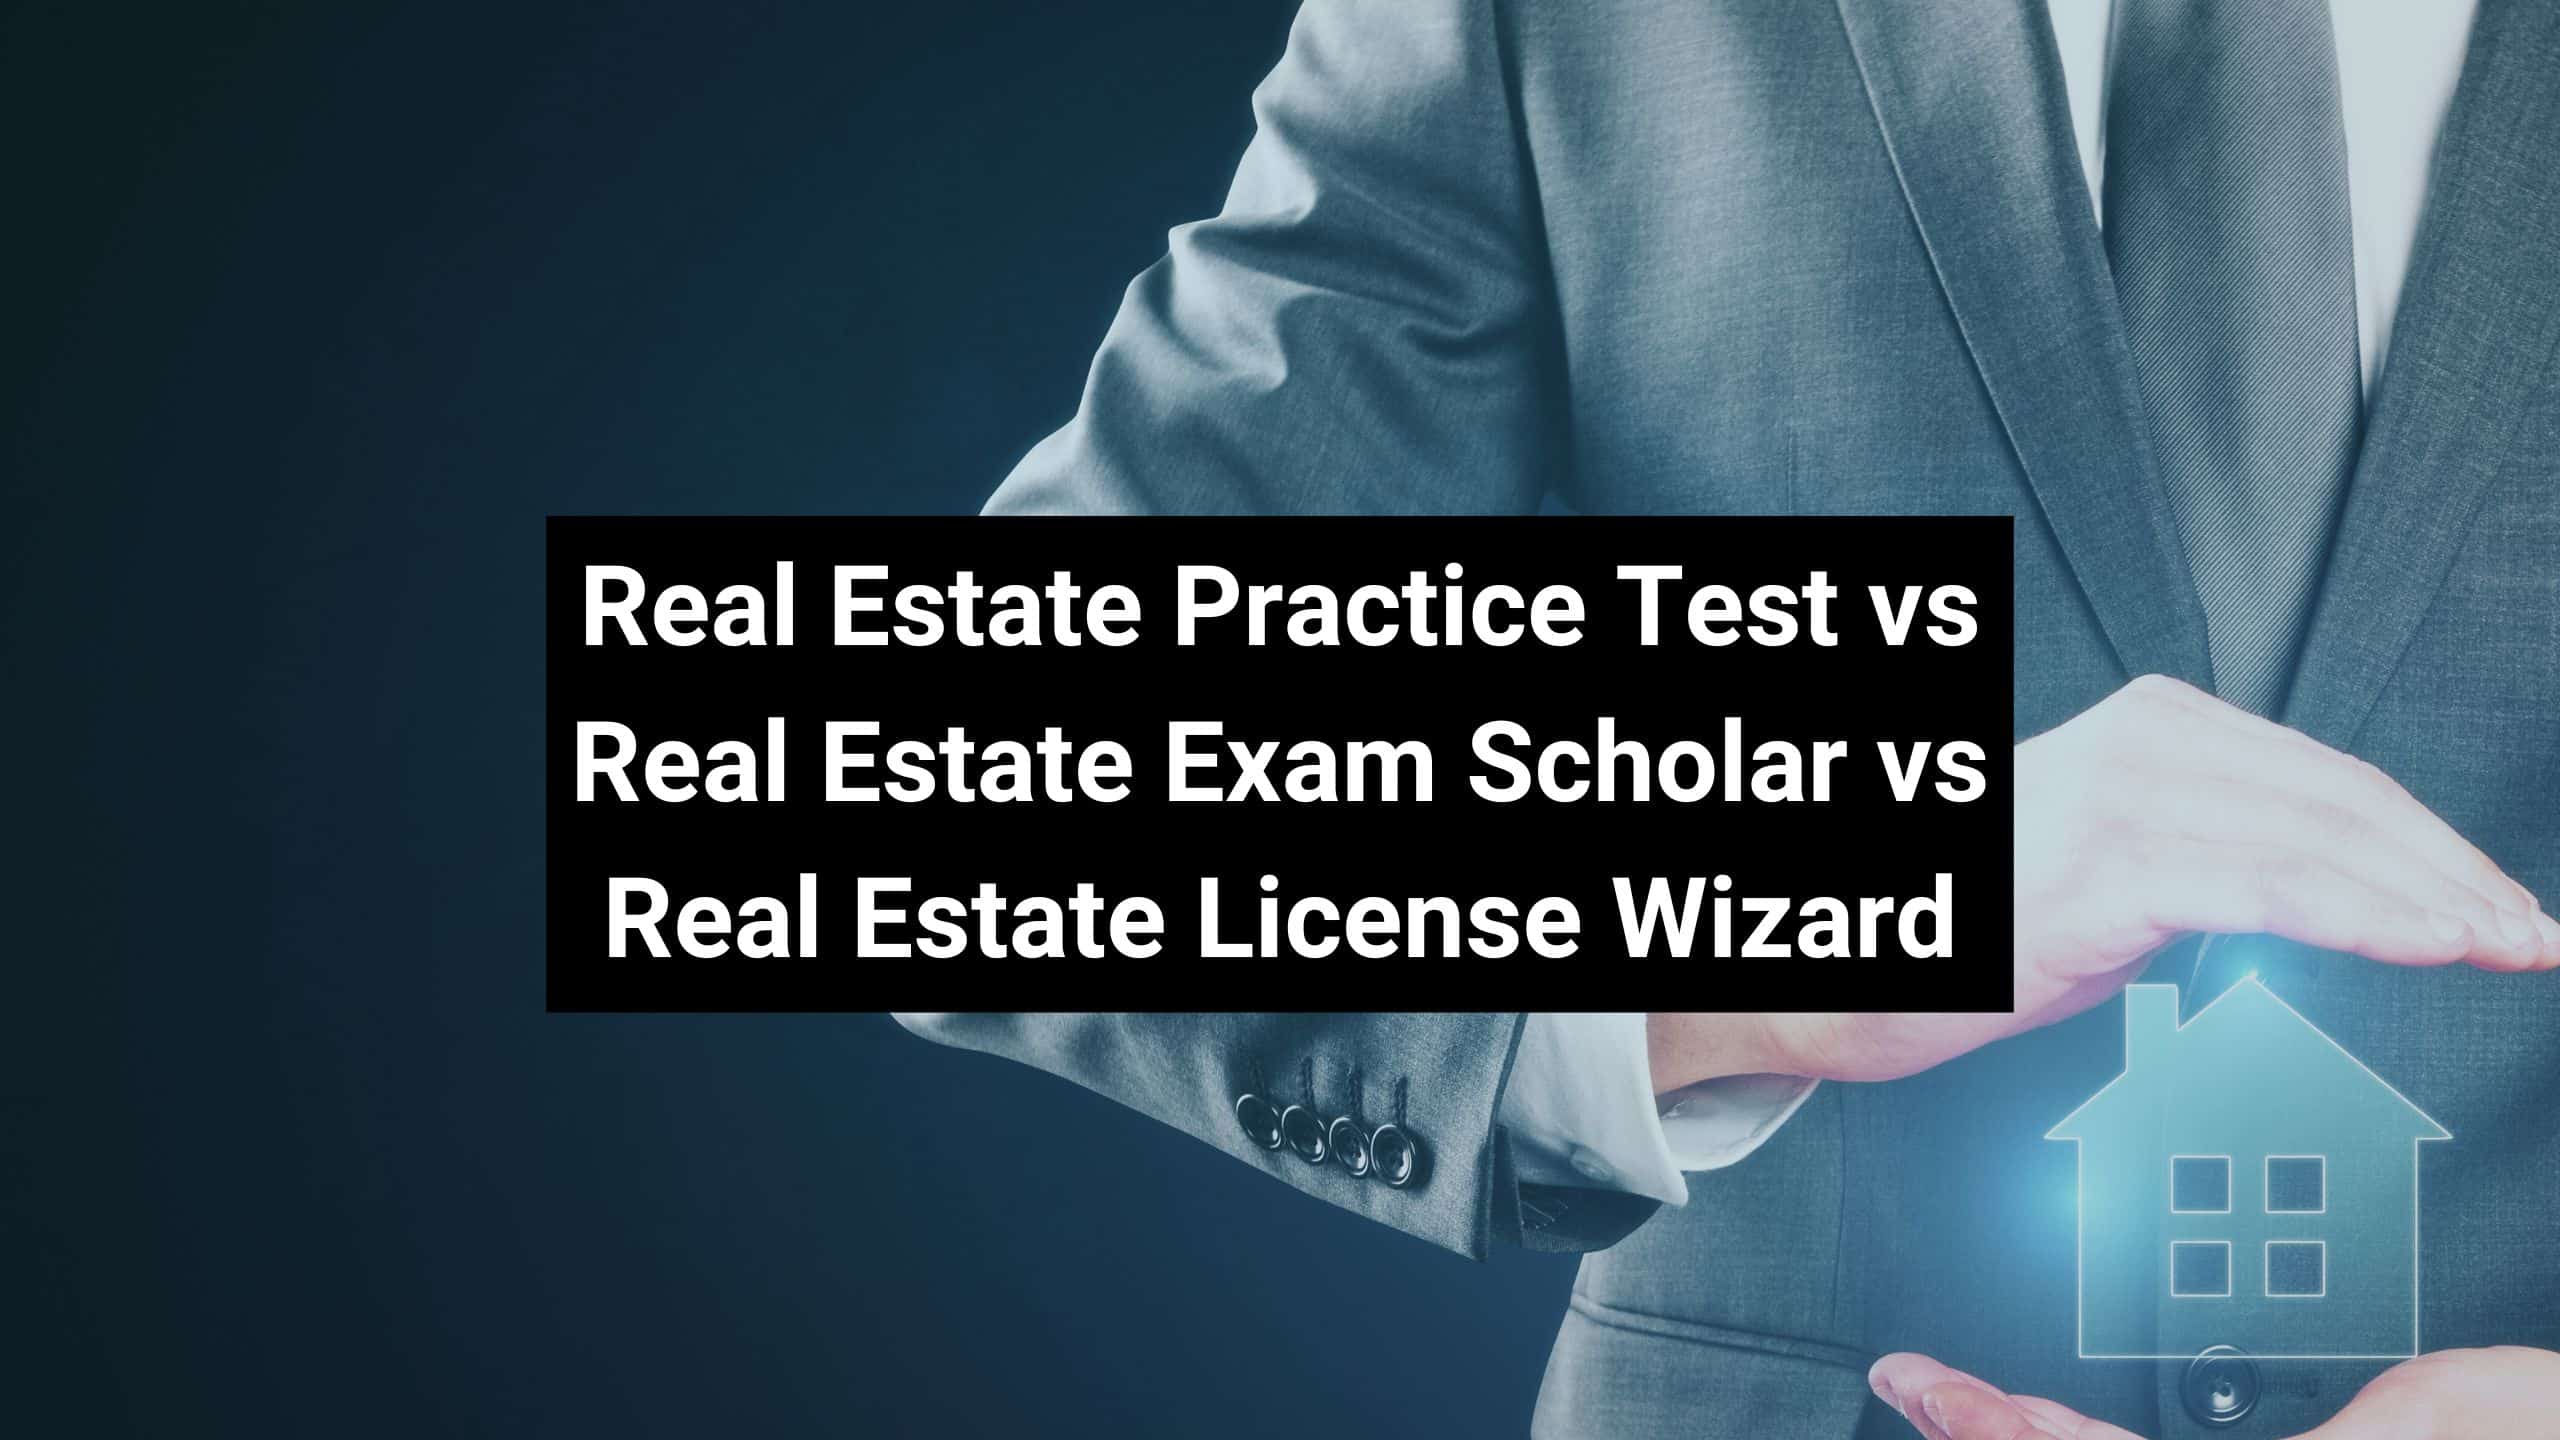 Real Estate Practice Test vs Real Estate Exam Scholar vs Real Estate License Wizard Image